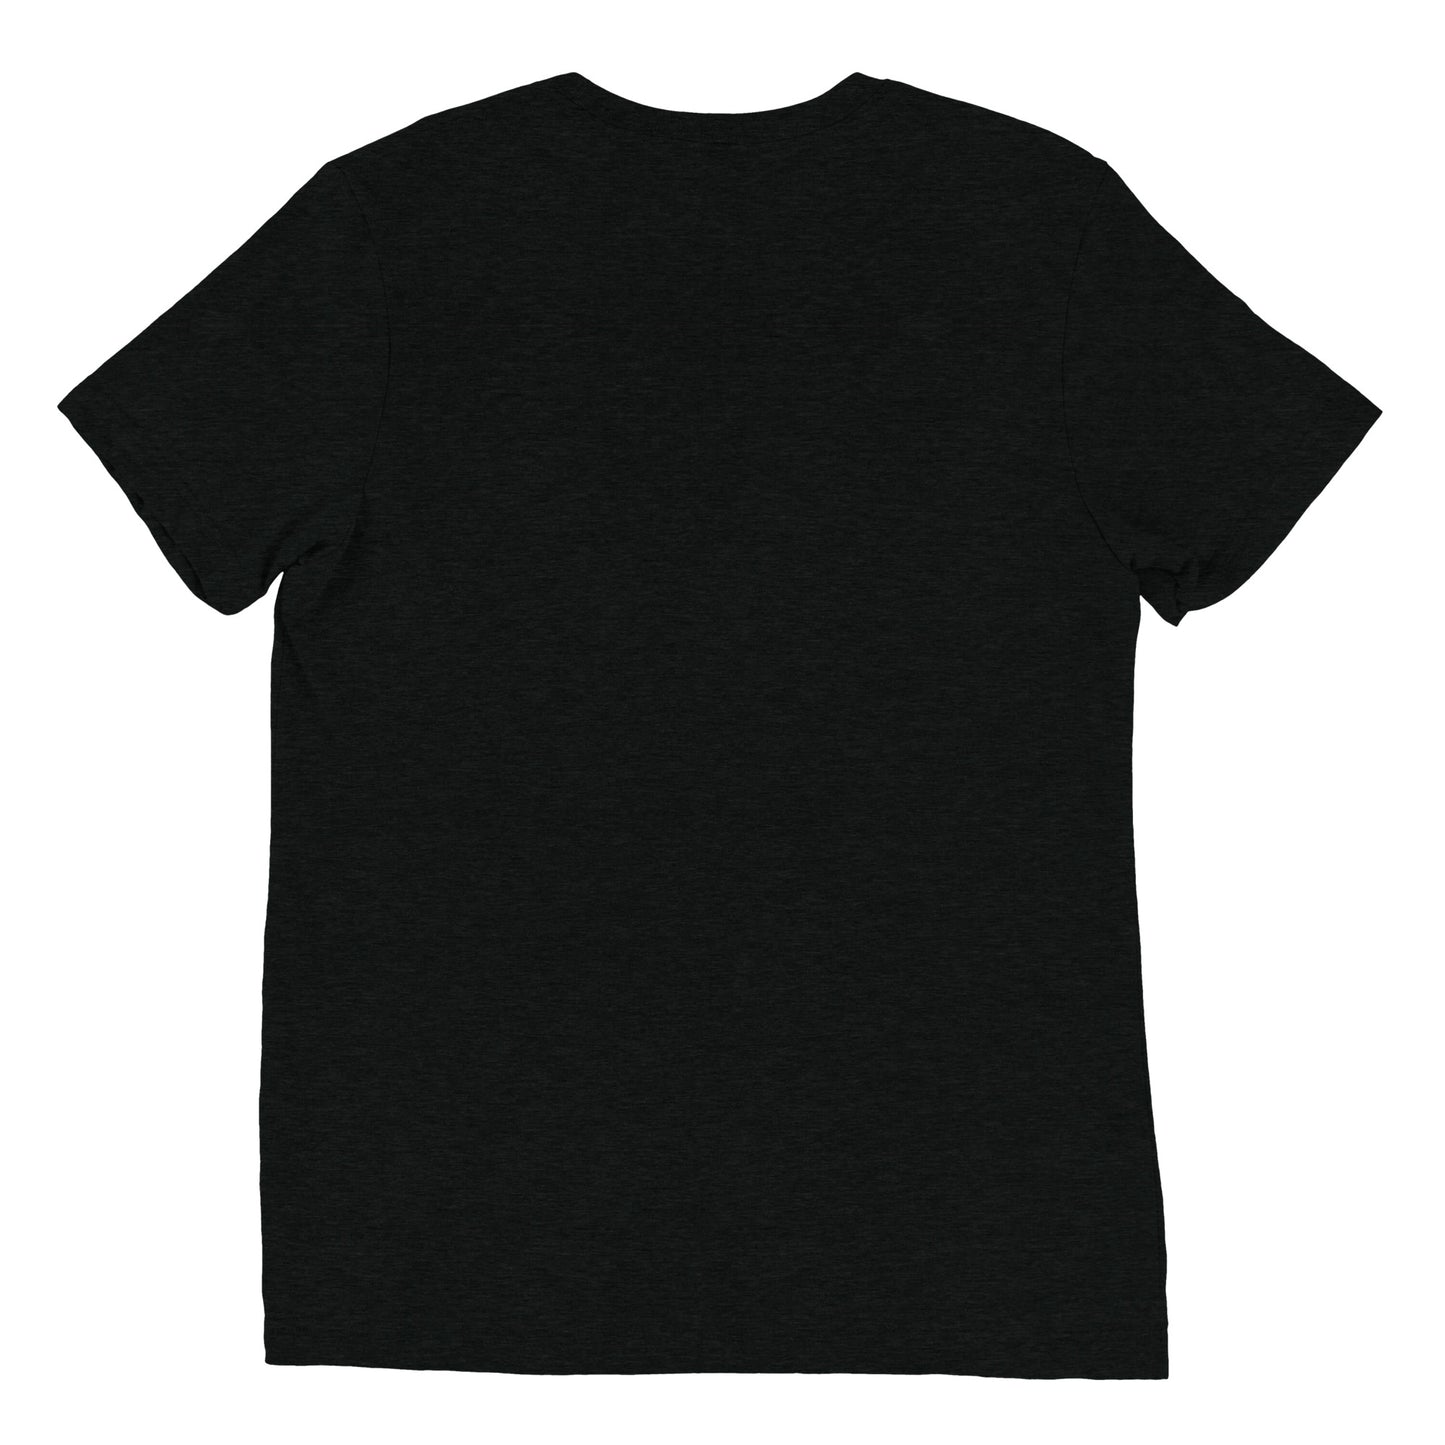 First Rodeo t-shirt (dark version)